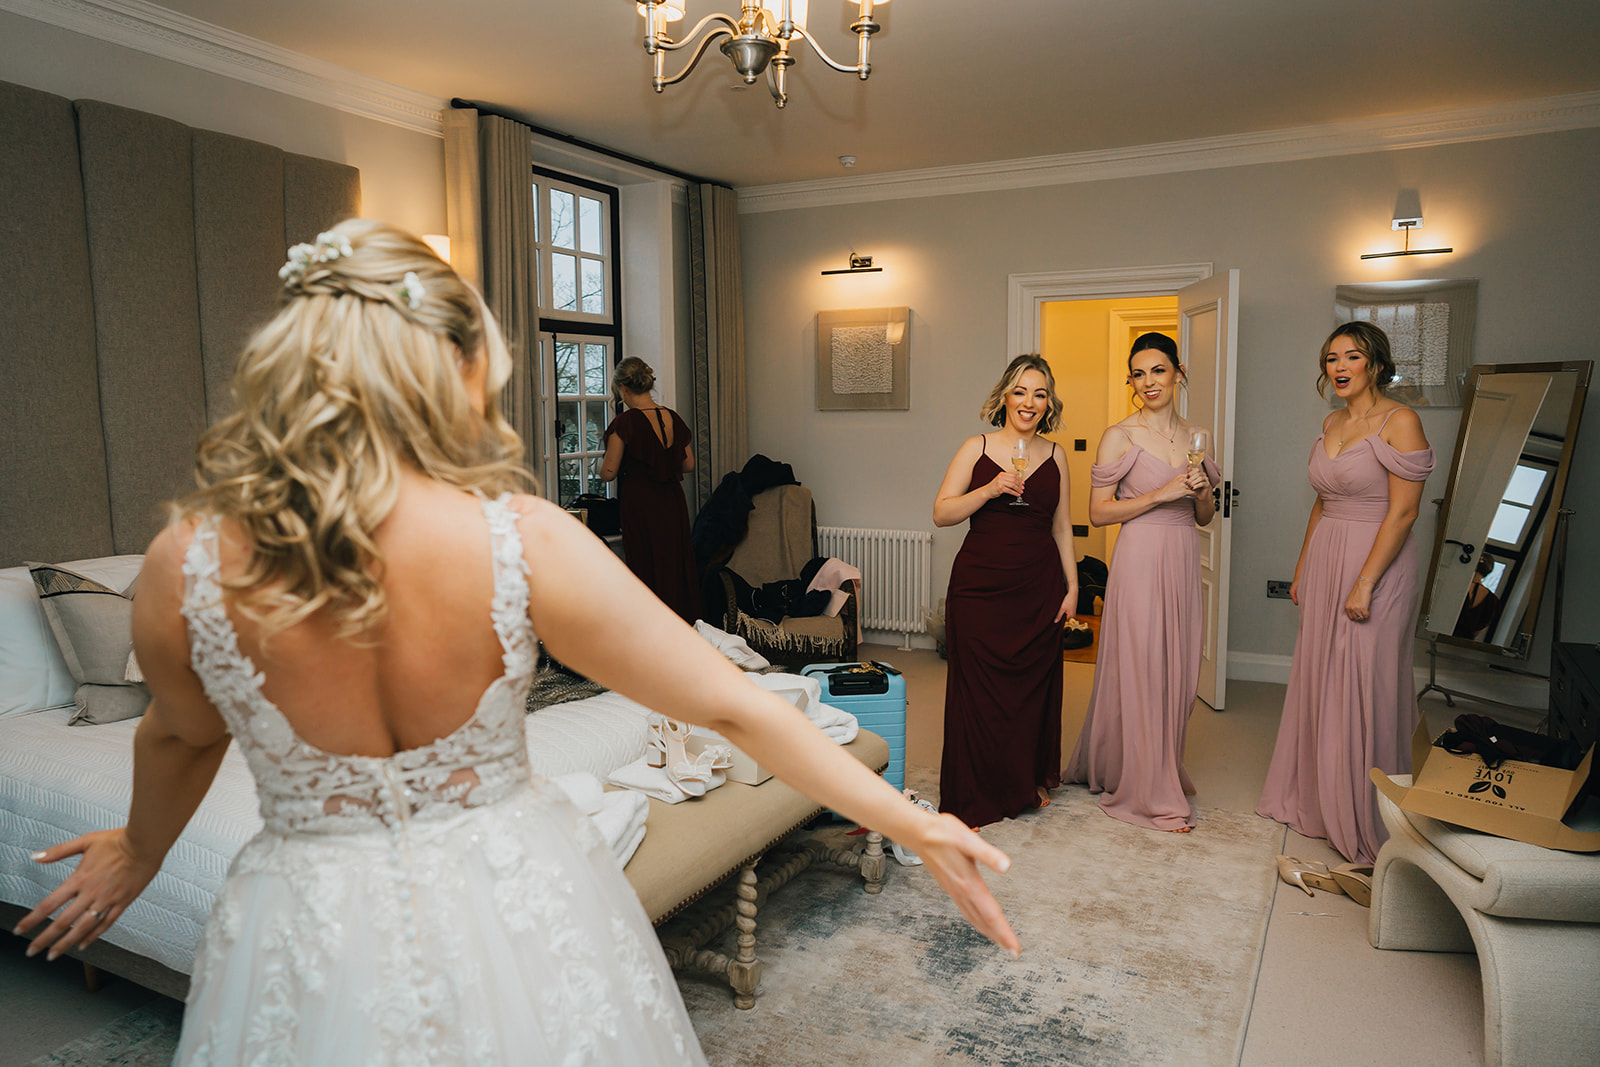 the bride reveals her wedding dress to her bridesmaids